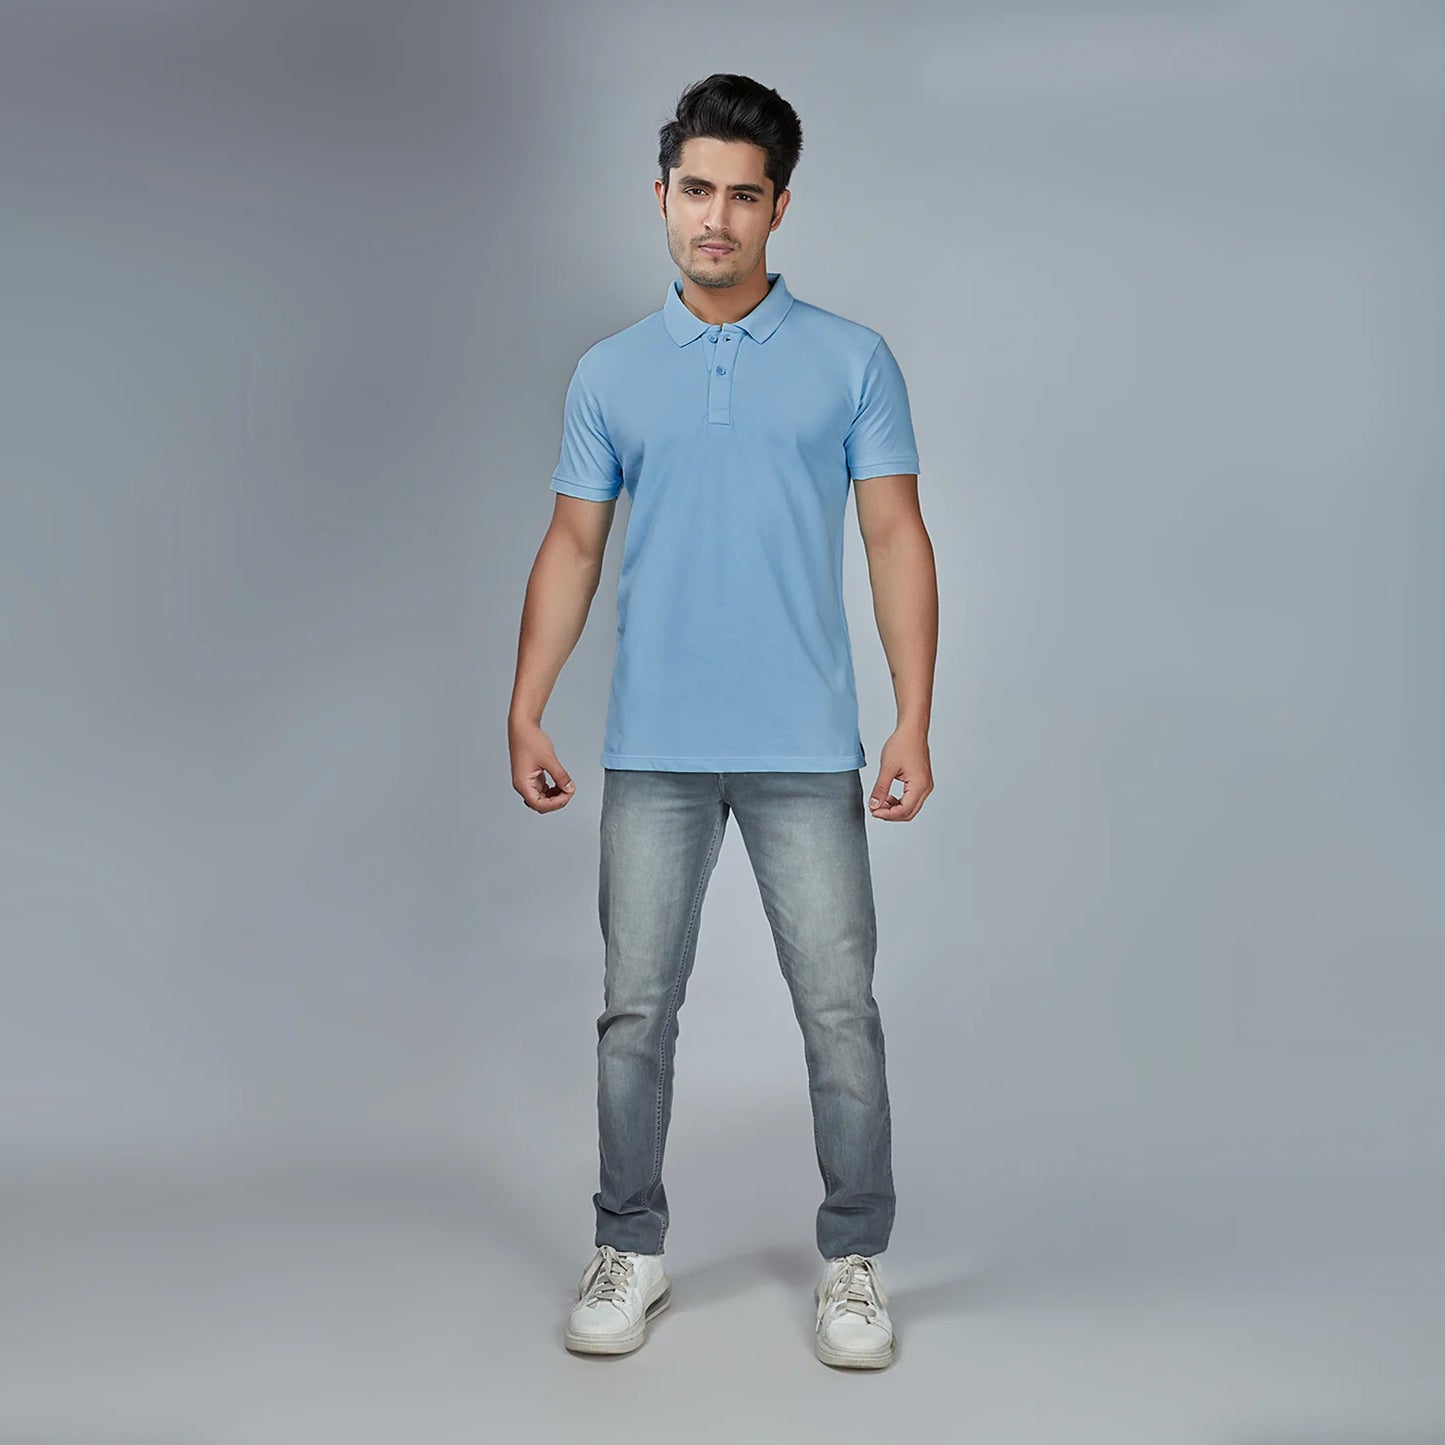 Men's Sky Blue Polo T-Shirt